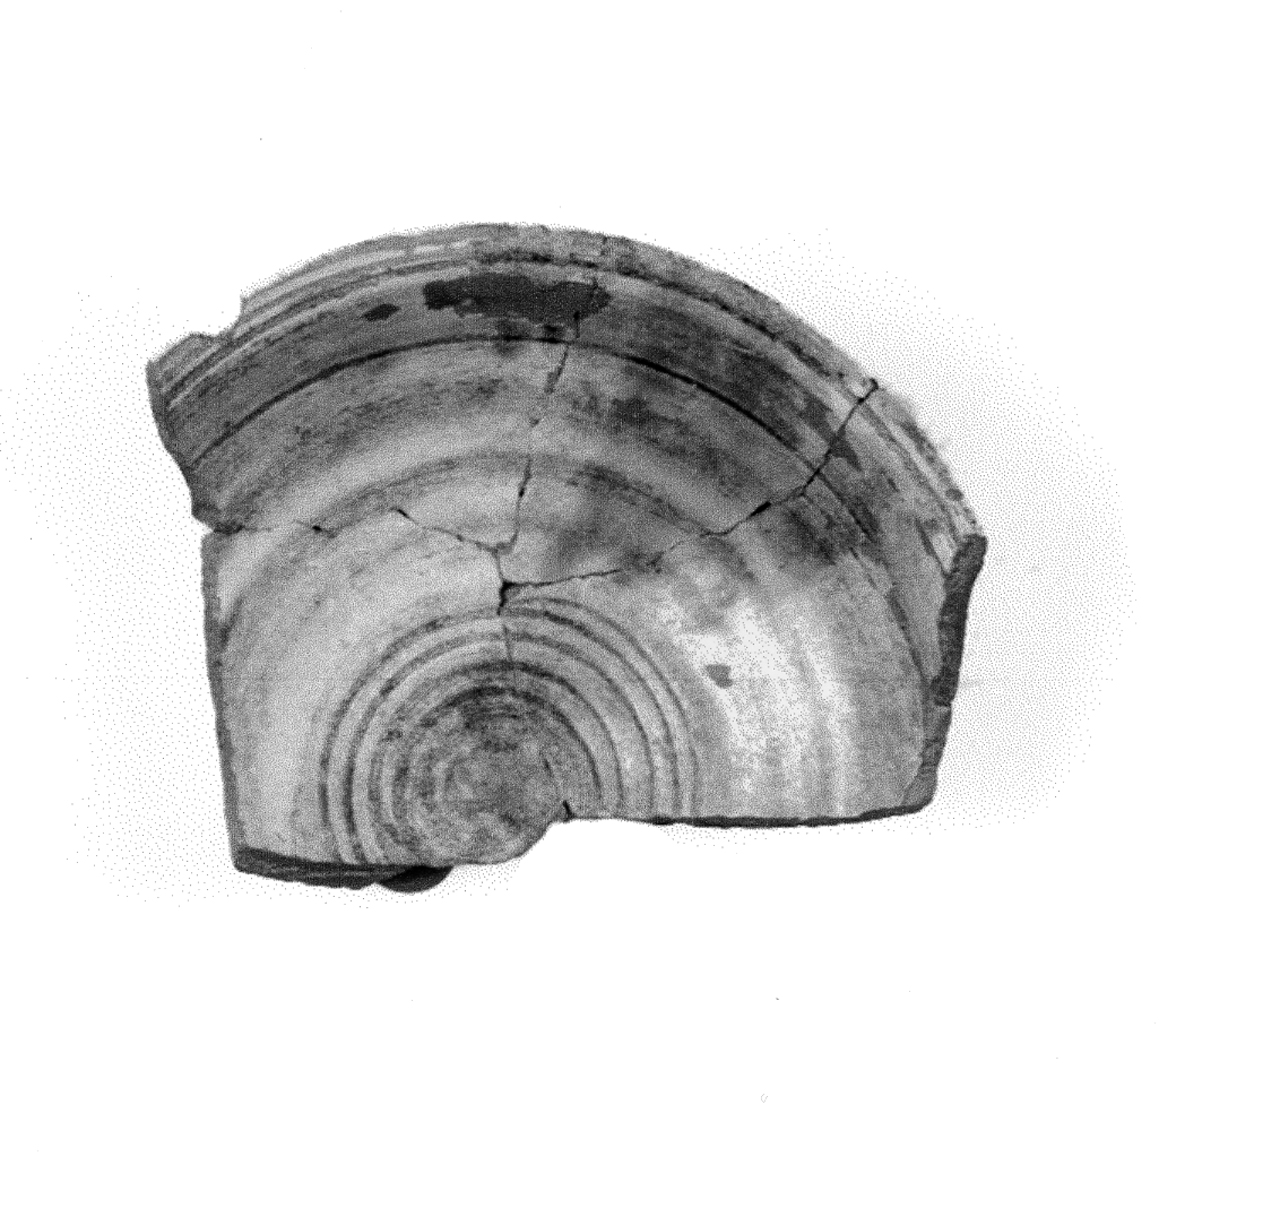 scodella - manifattura veneziana (metà sec. XIII d.C)